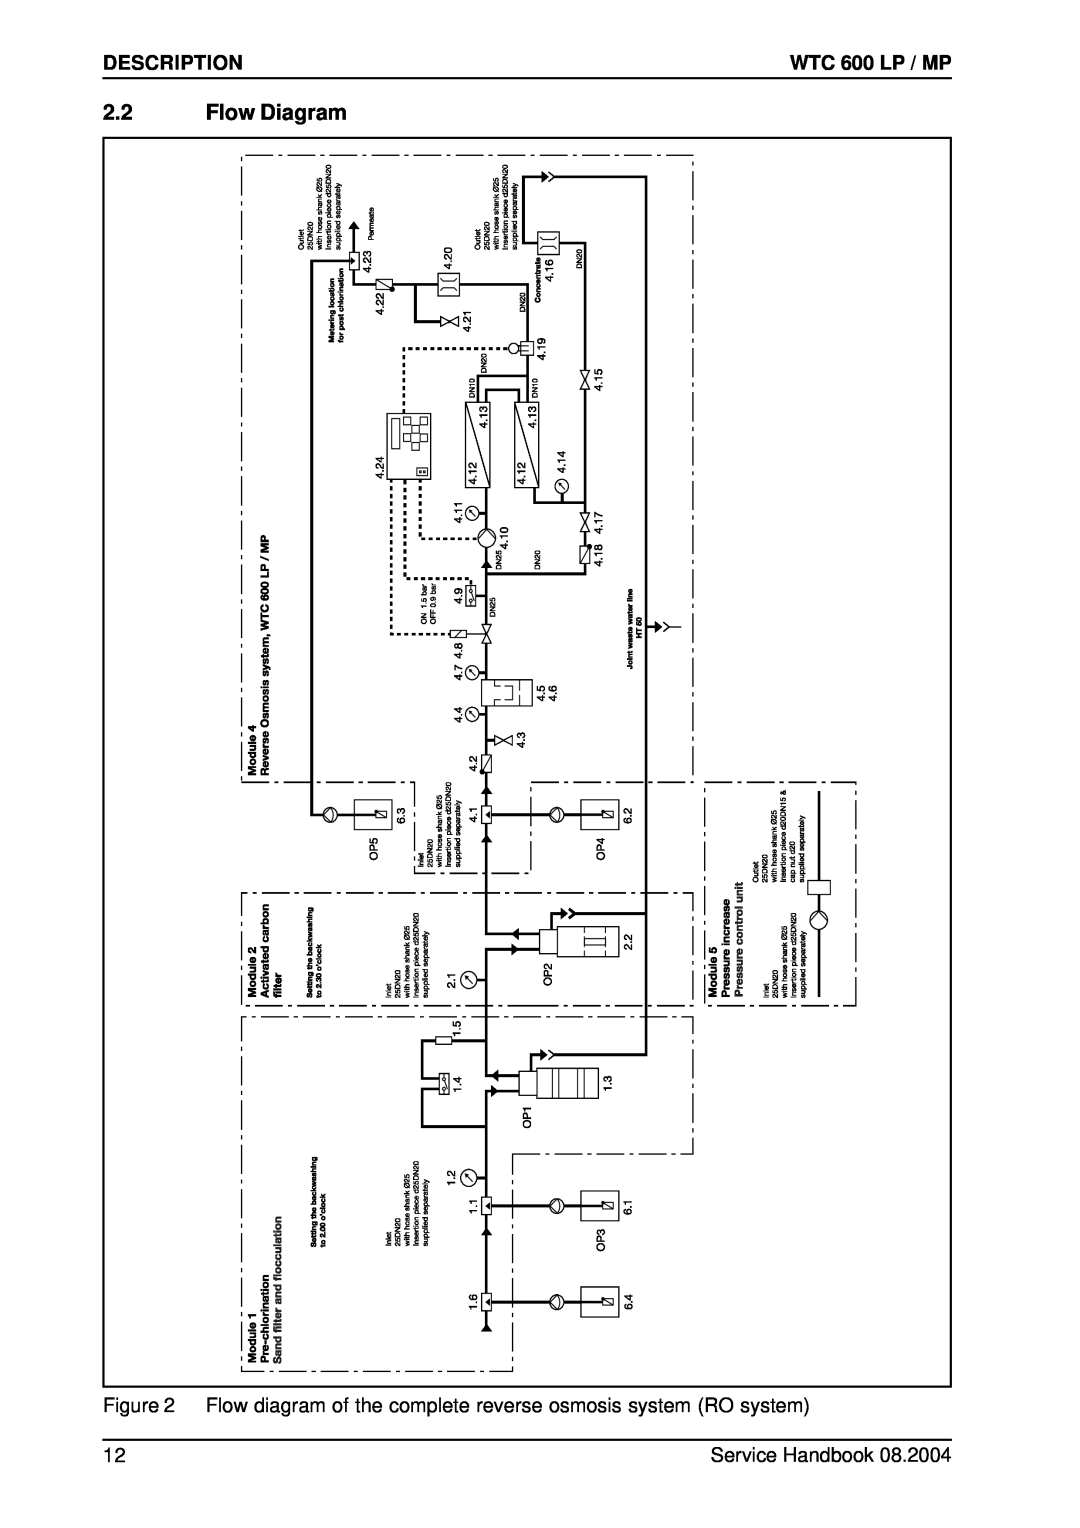 Karcher 600 CD manual 2.2Flow Diagram, Service Handbook, WTC 600 LP / MP 